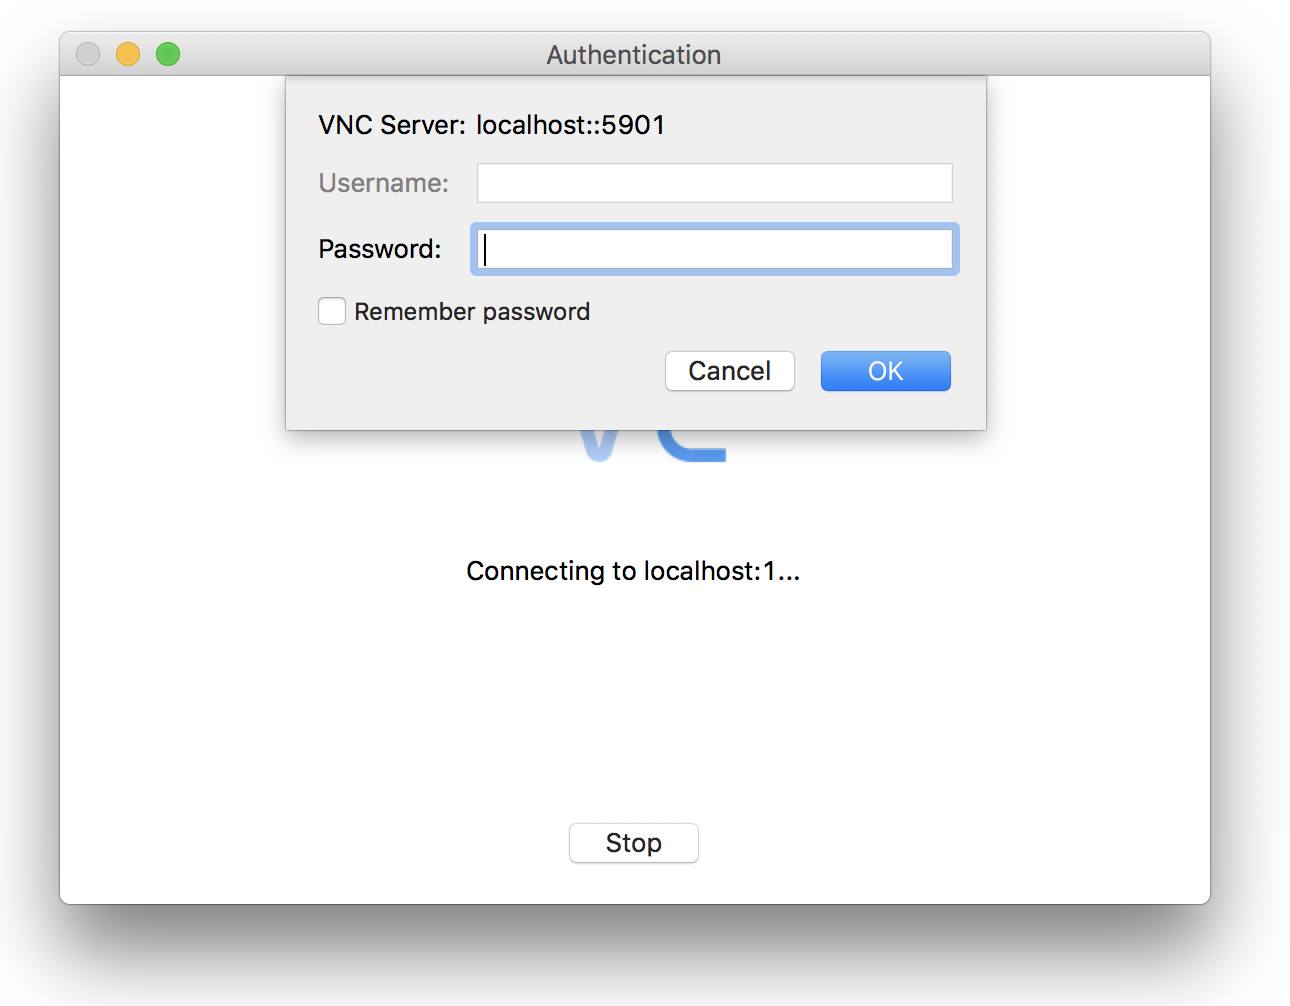 The VNC password prompt.